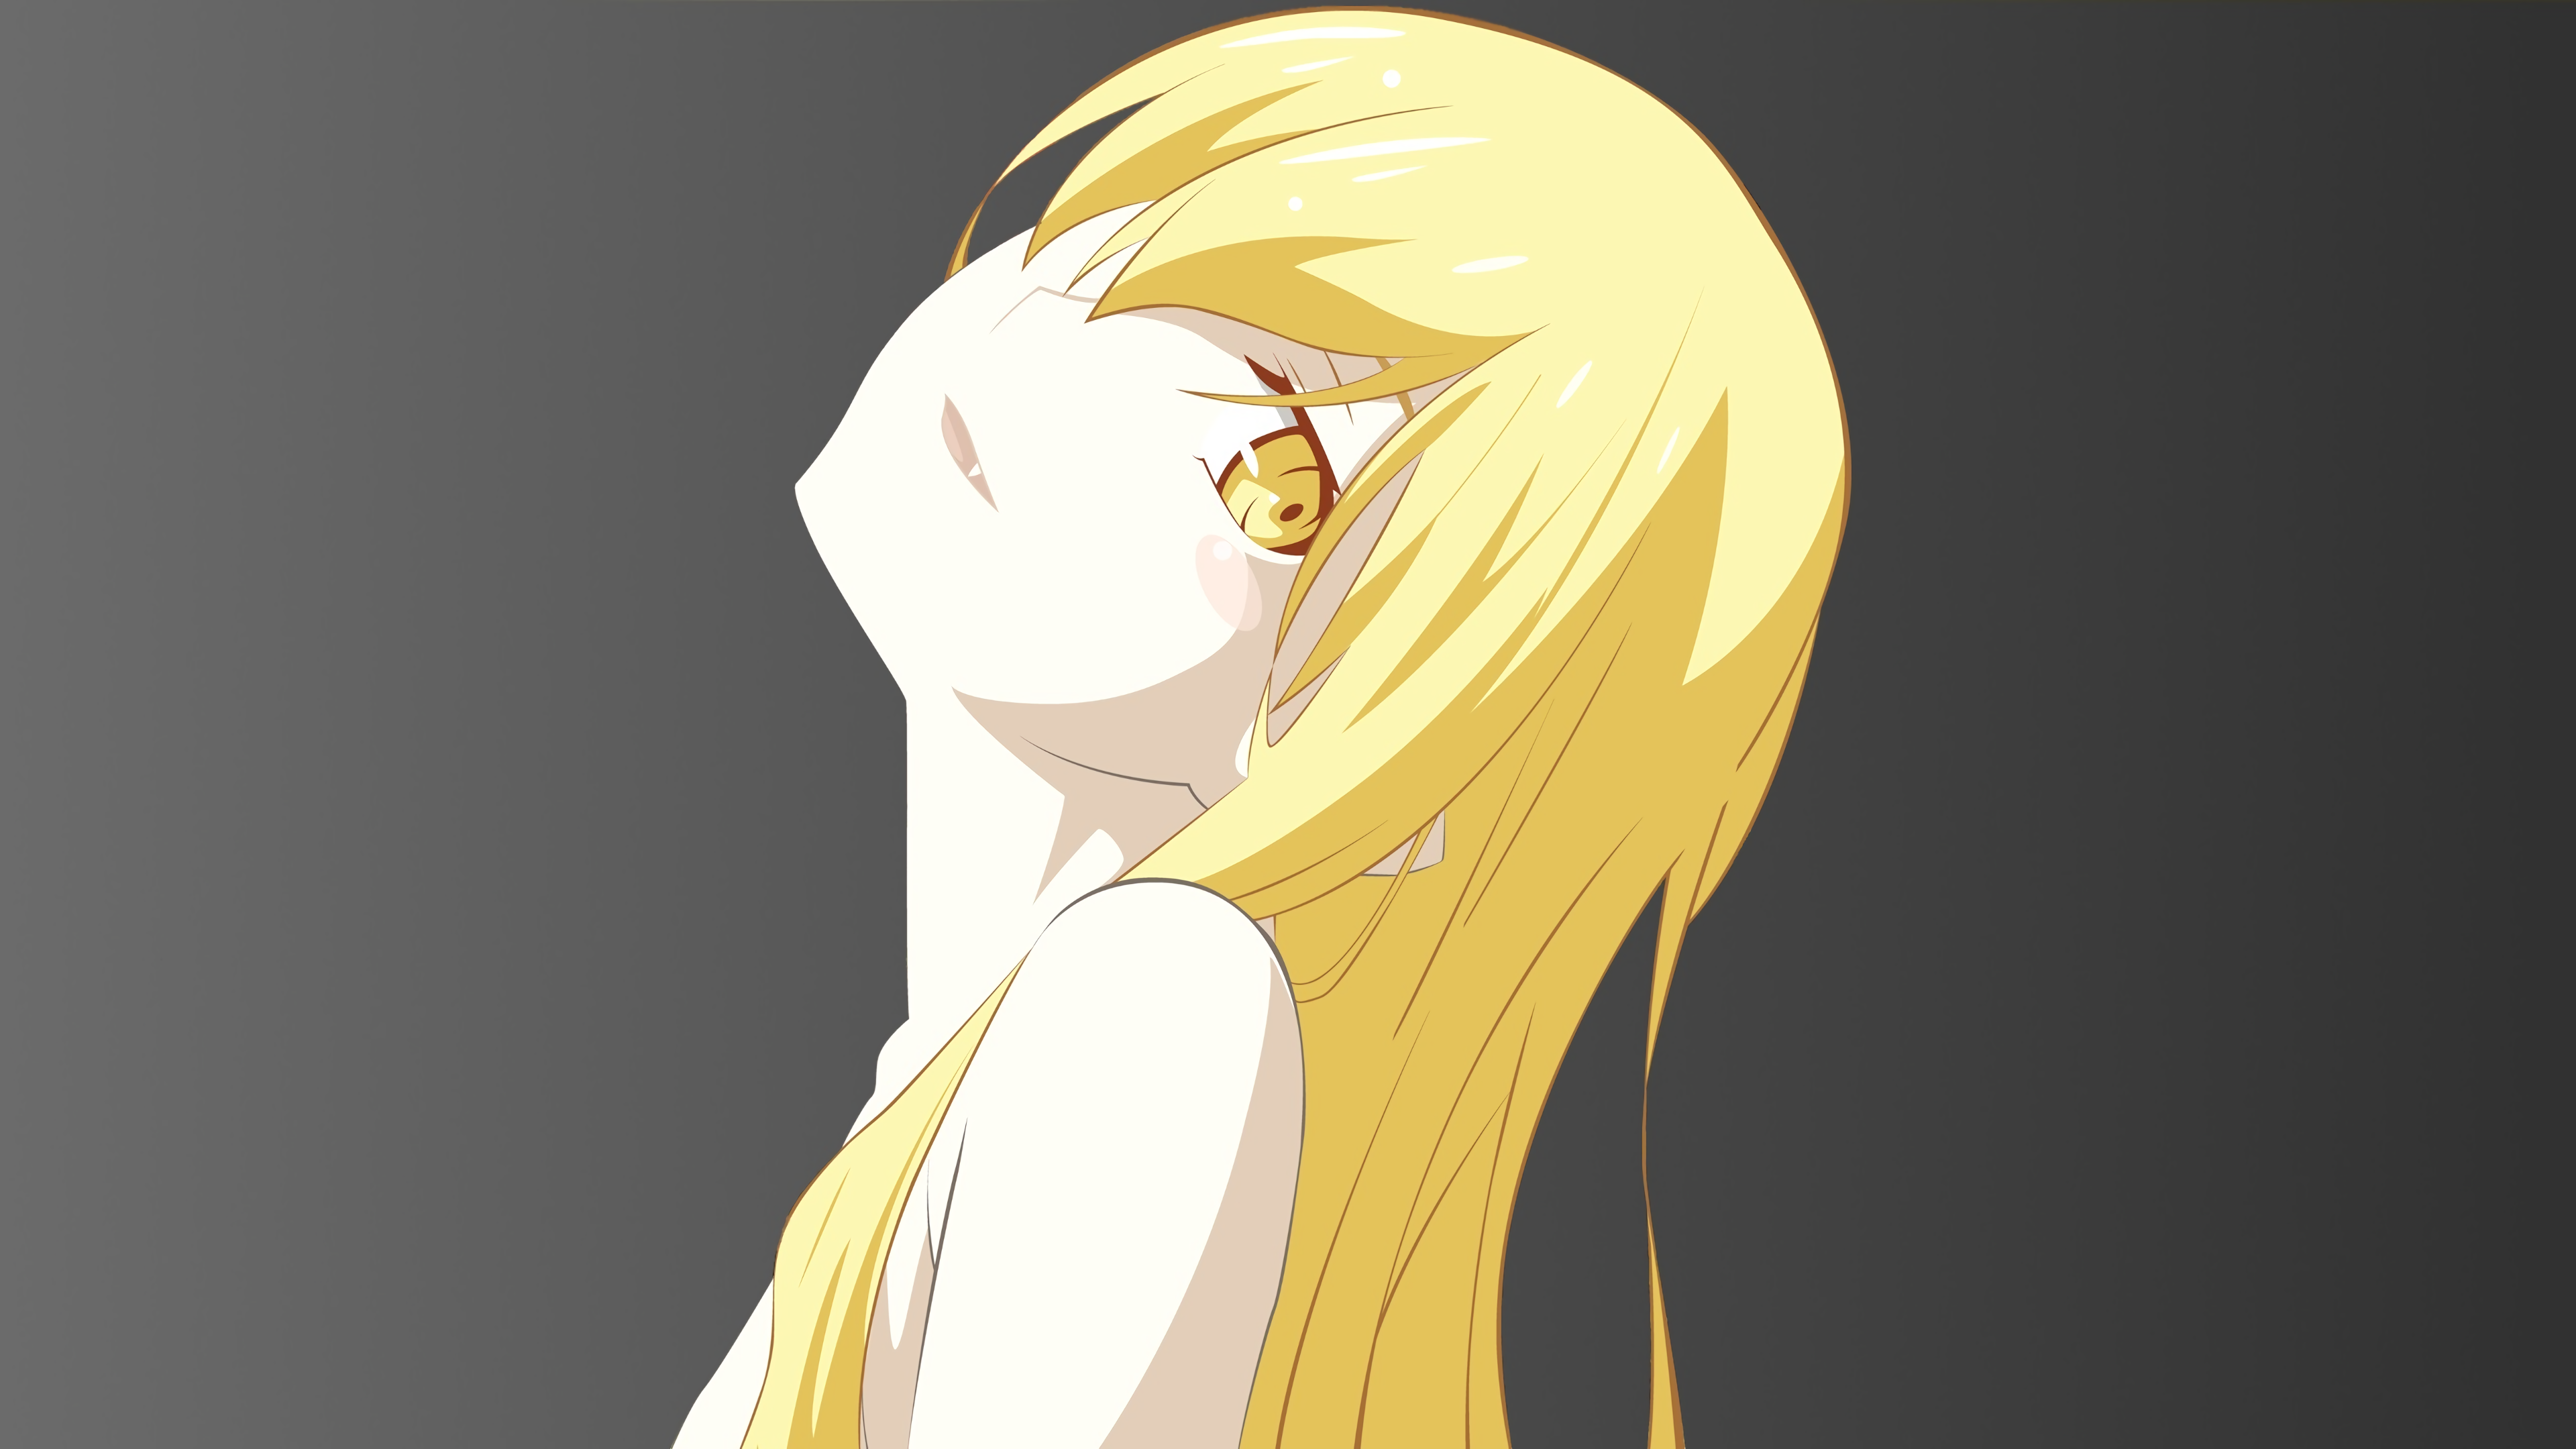 Anime 3840x2160 anime anime girls Oshino Shinobu long hair blonde vector art Monogatari Series head tilt yellow eyes portrait face hair over one eye gray background simple background